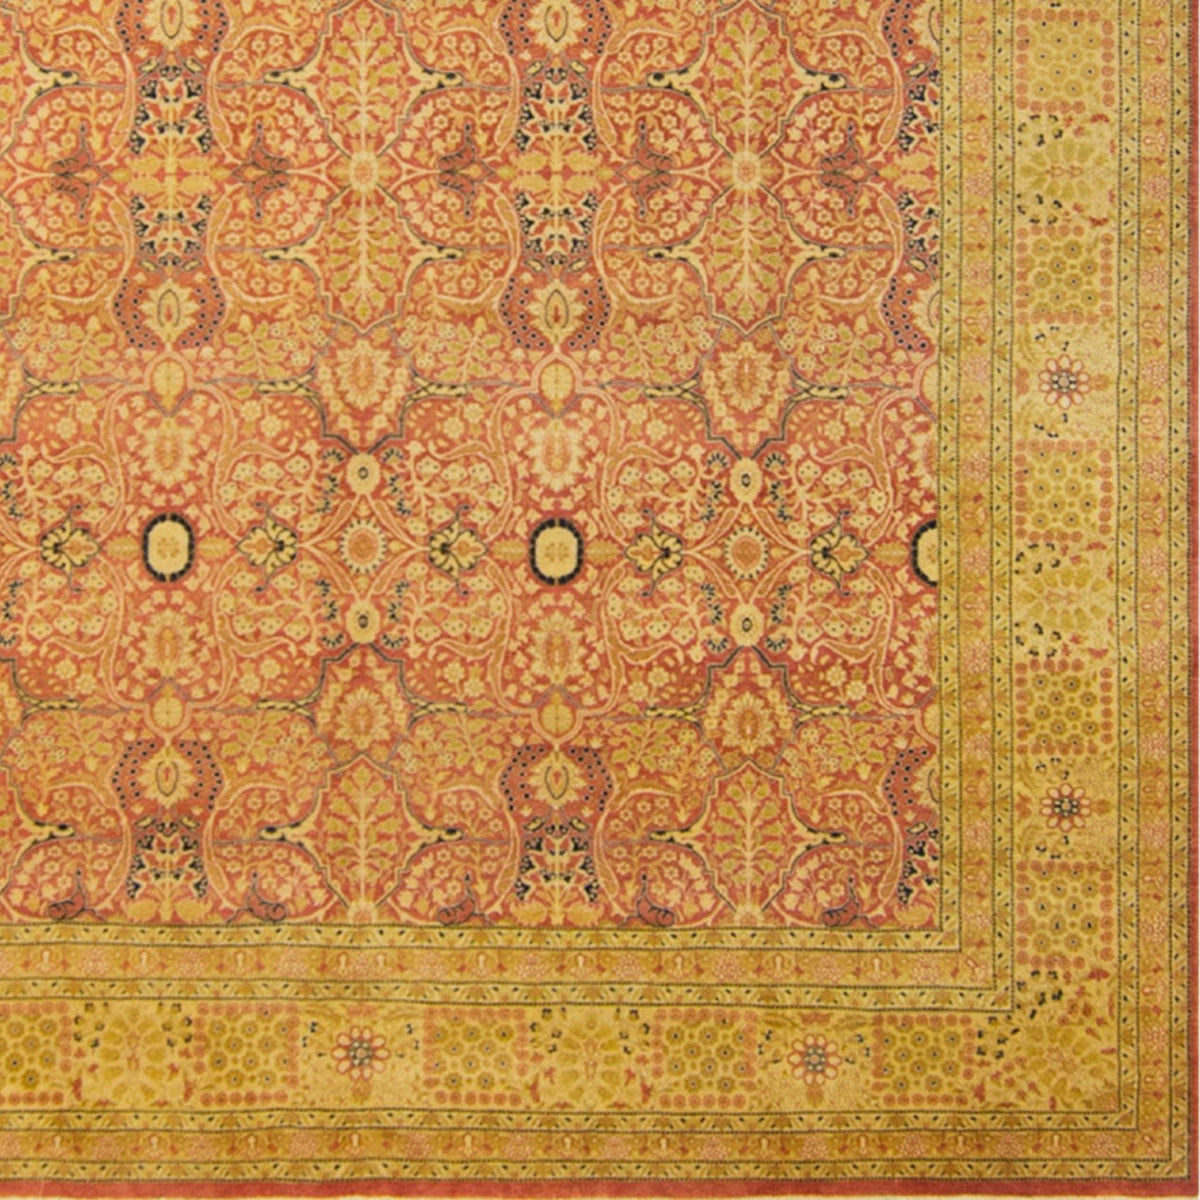 Fine Hand-knotted Wool and Silk Tabriz Rug 243cm x 306cm